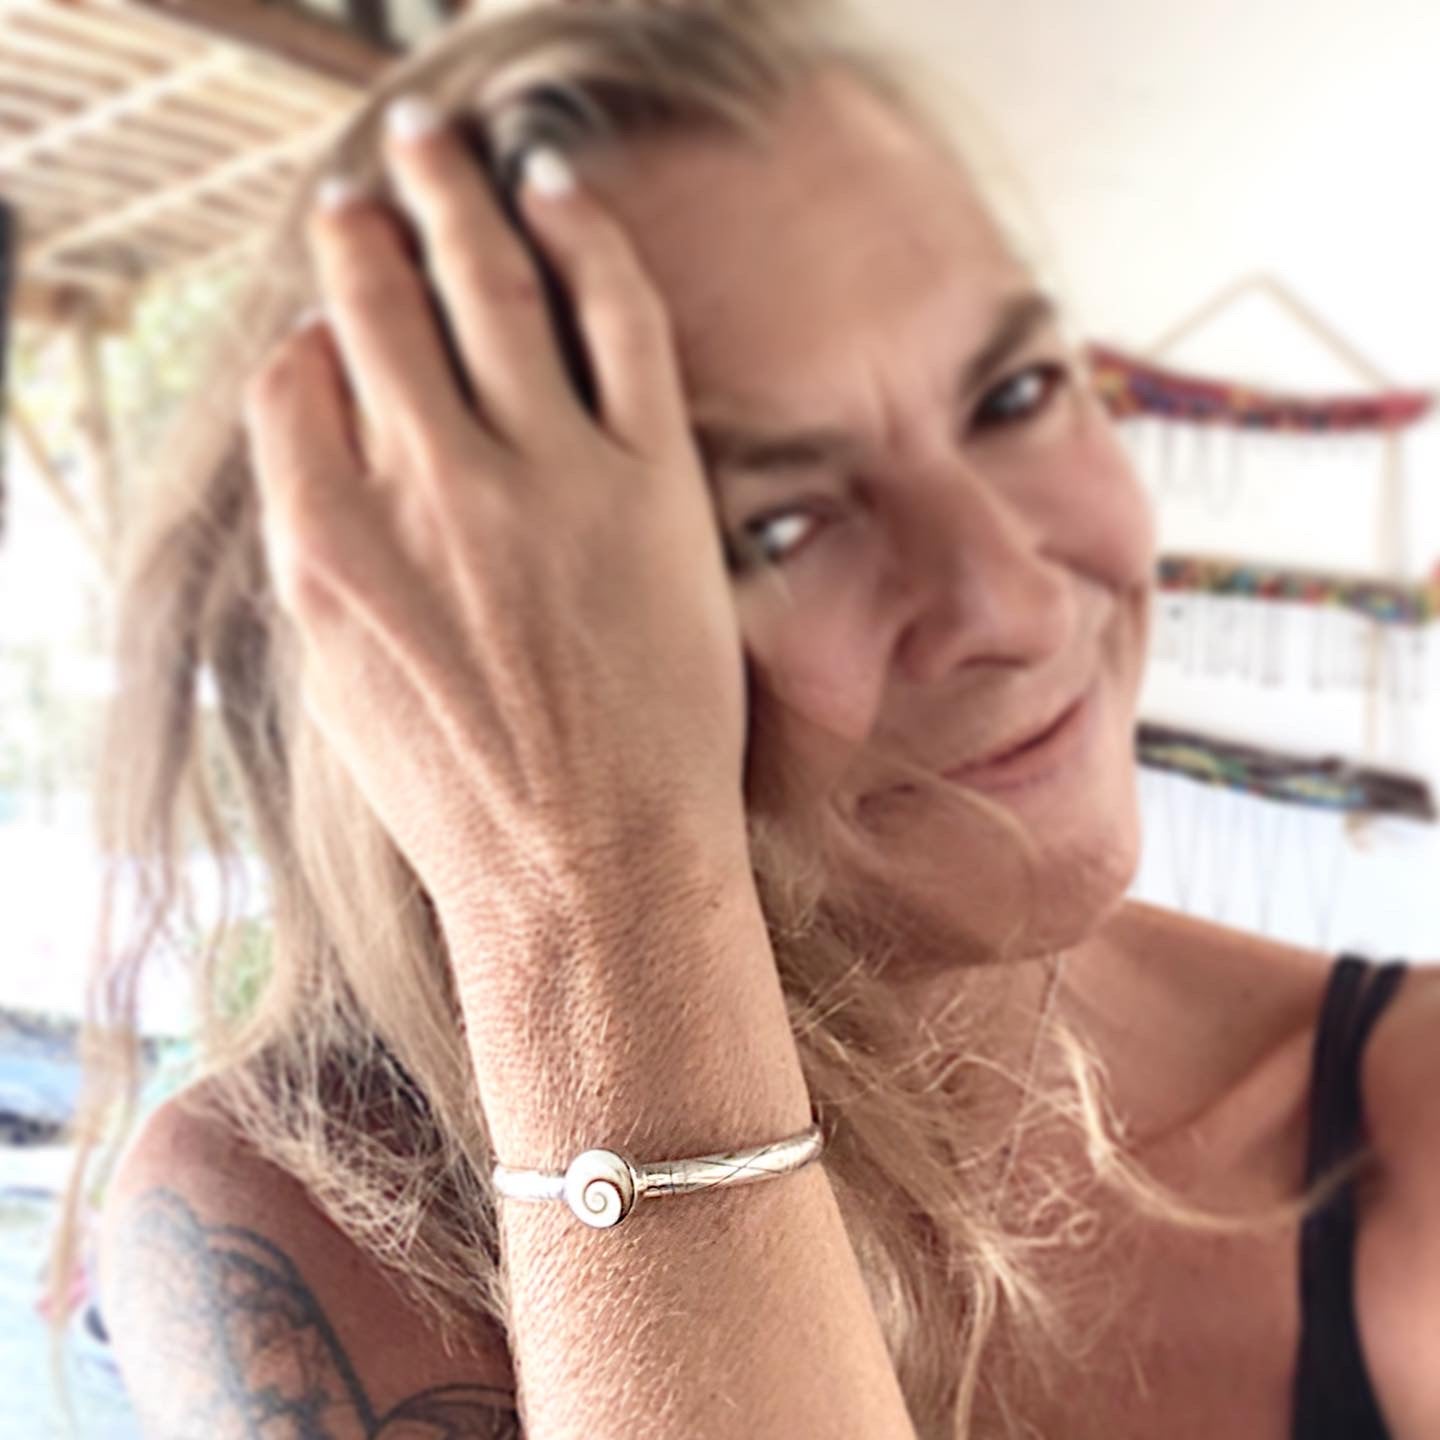 Handmade Sterling Silver925 bracelet with a shiva eye shell